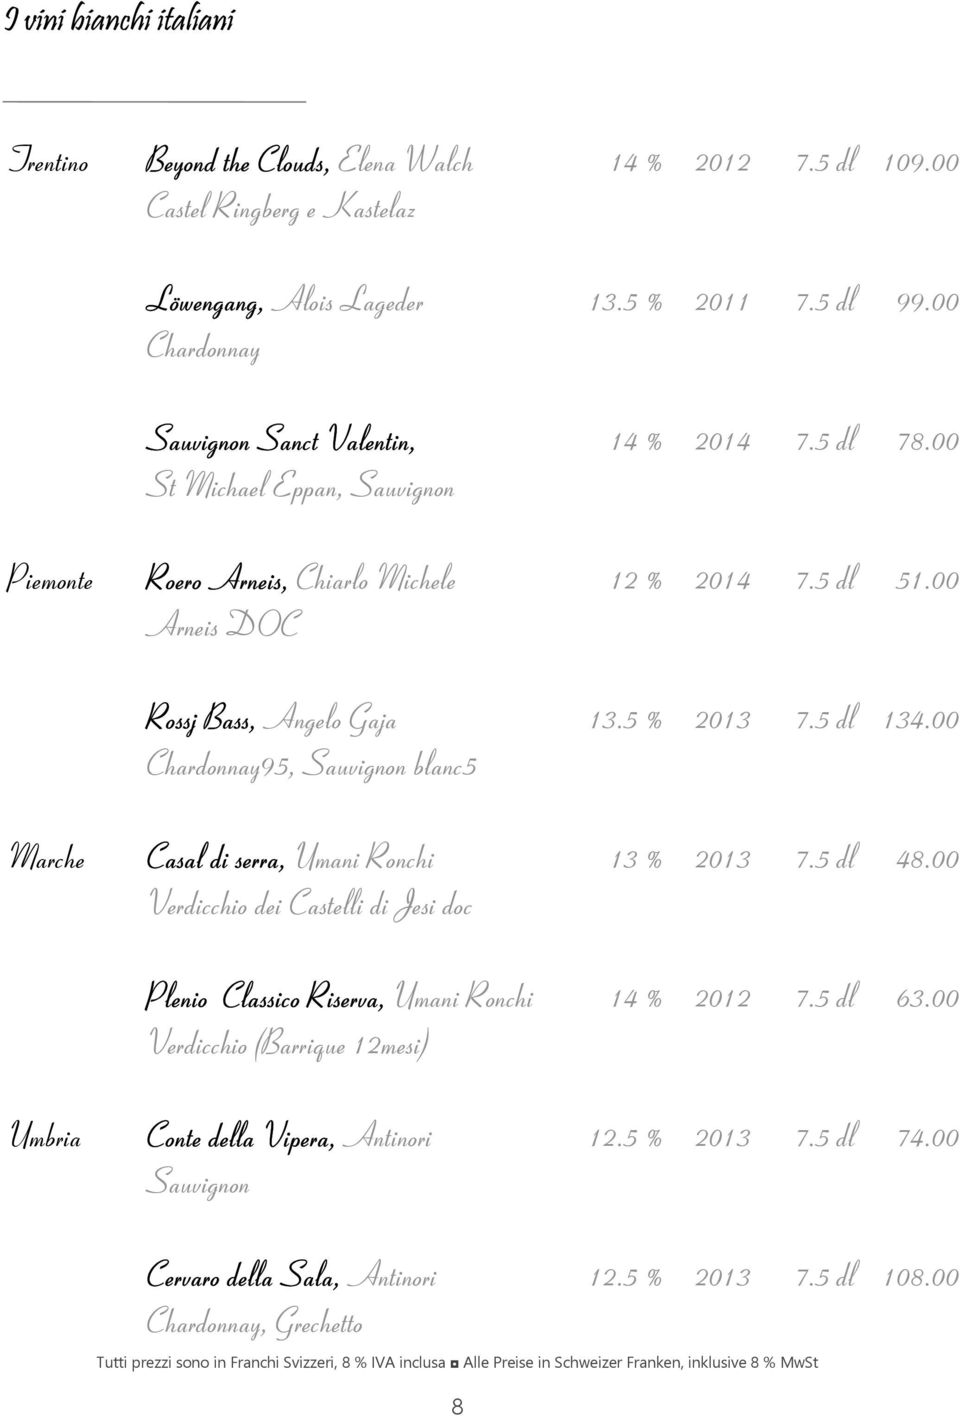 00 Arneis DOC Rossj Bass, Angelo Gaja 13.5 % 2013 7.5 dl 134.00 Chardonnay95, Sauvignon blanc5 Marche Casal di serra, Umani Ronchi 13 % 2013 7.5 dl 48.